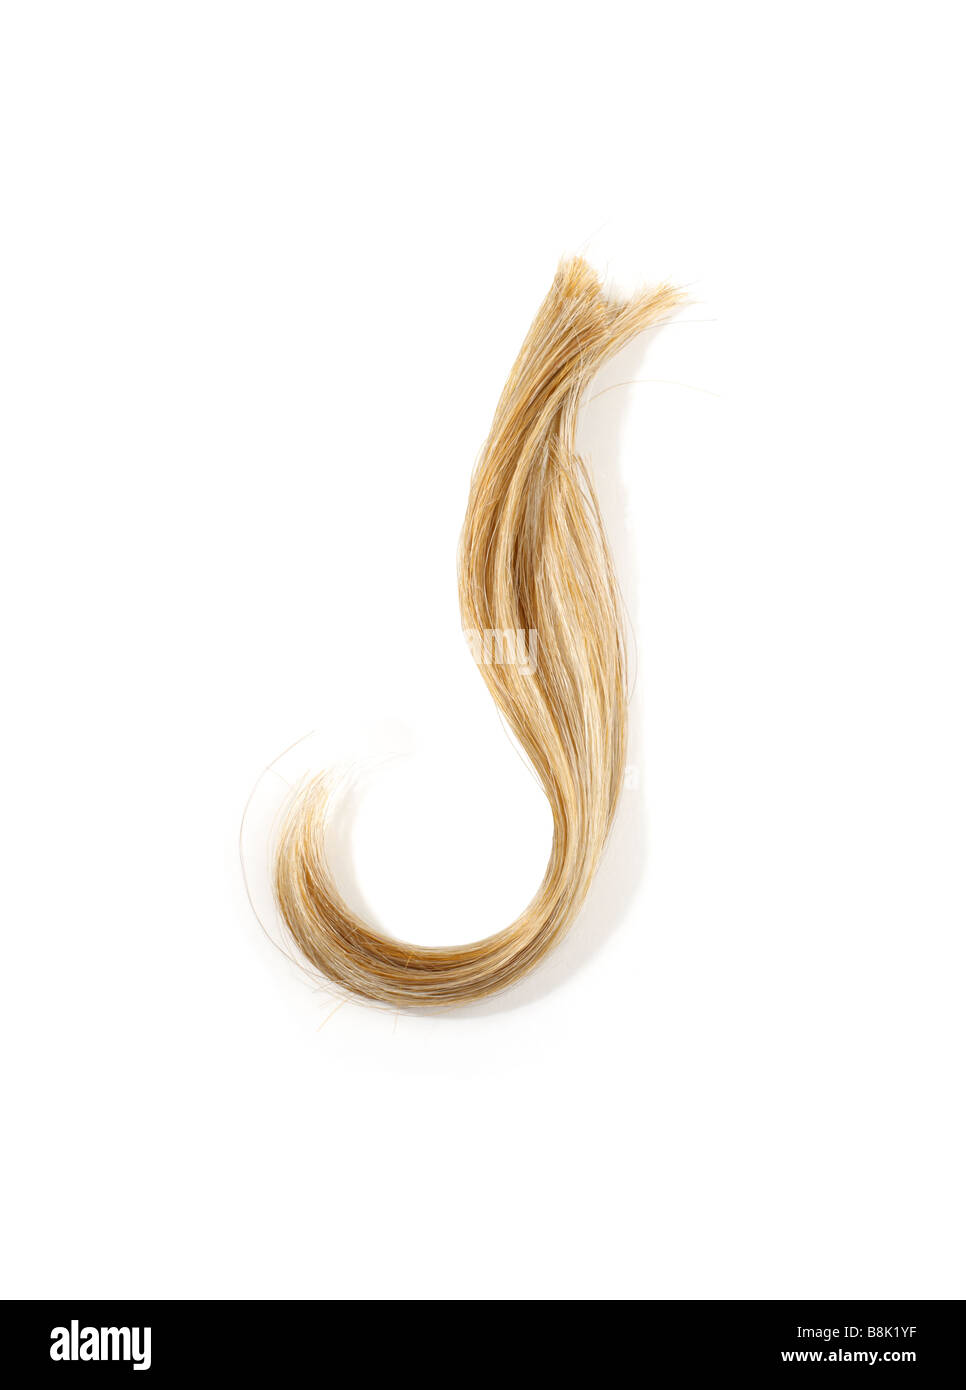 Studio shot of a Lock of Blond hair Stock Photo